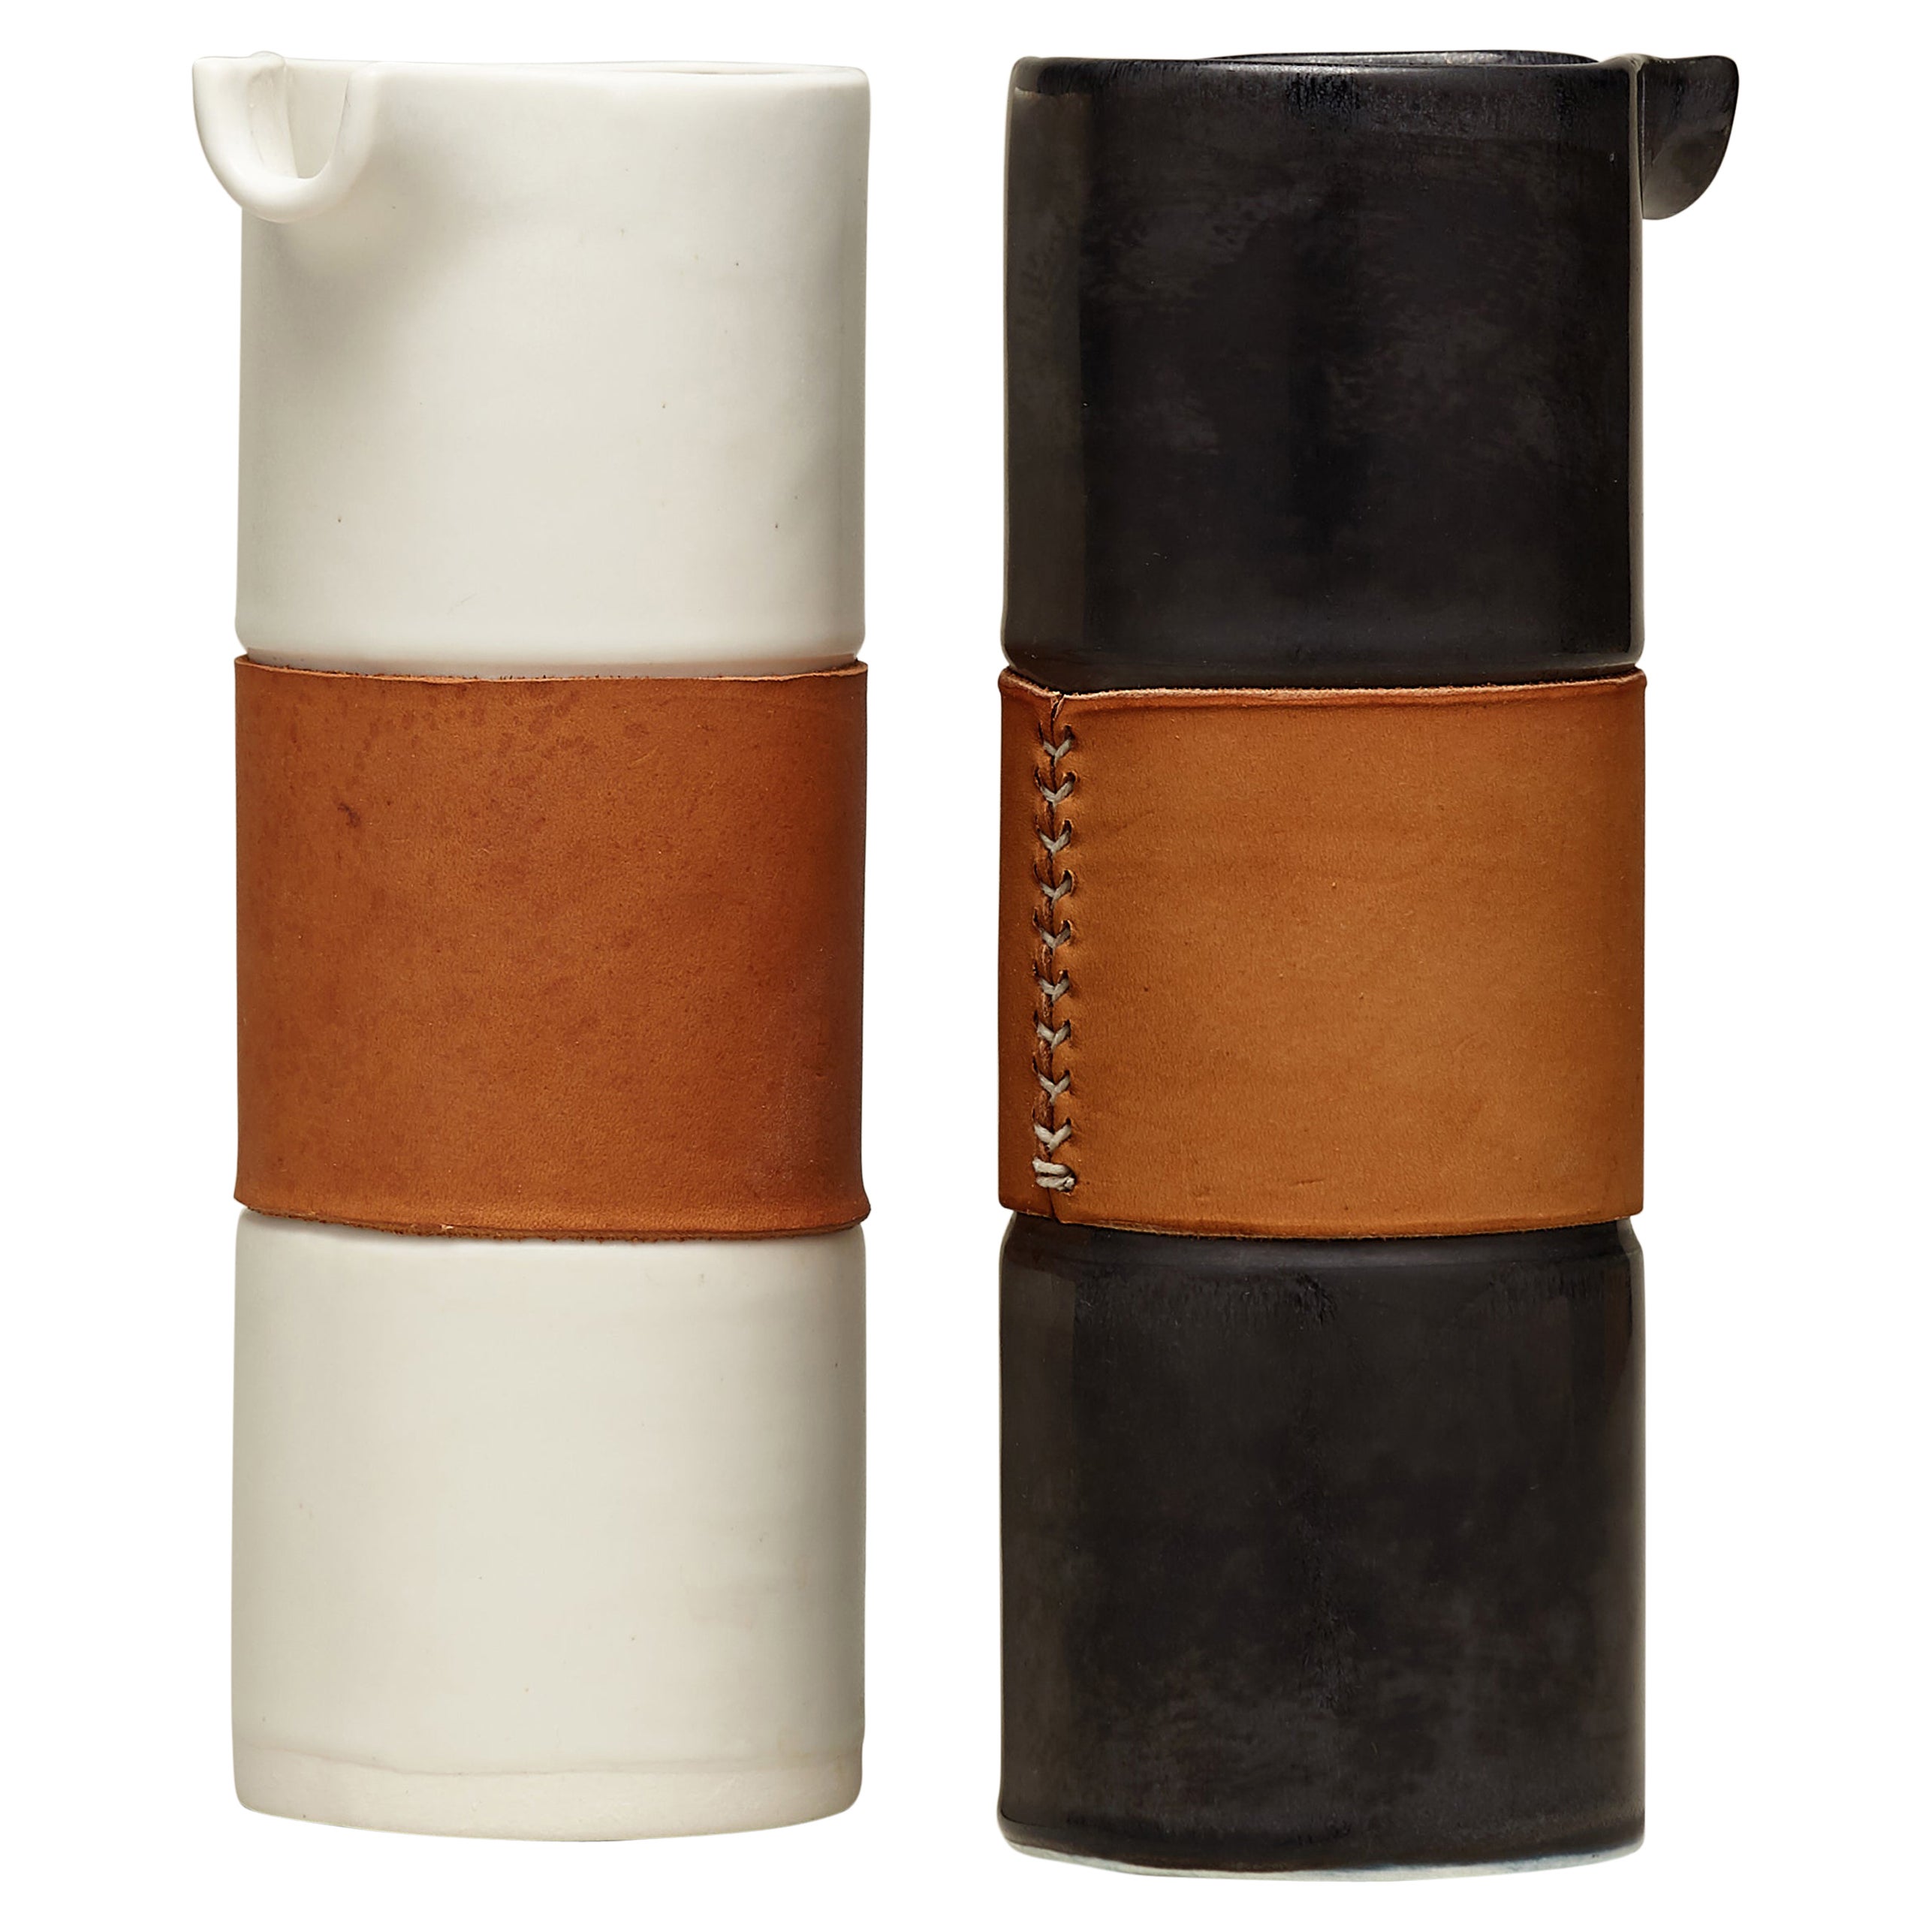 Handcrafted Modern Porcelain Pitcher Handstitch Leather Wrap